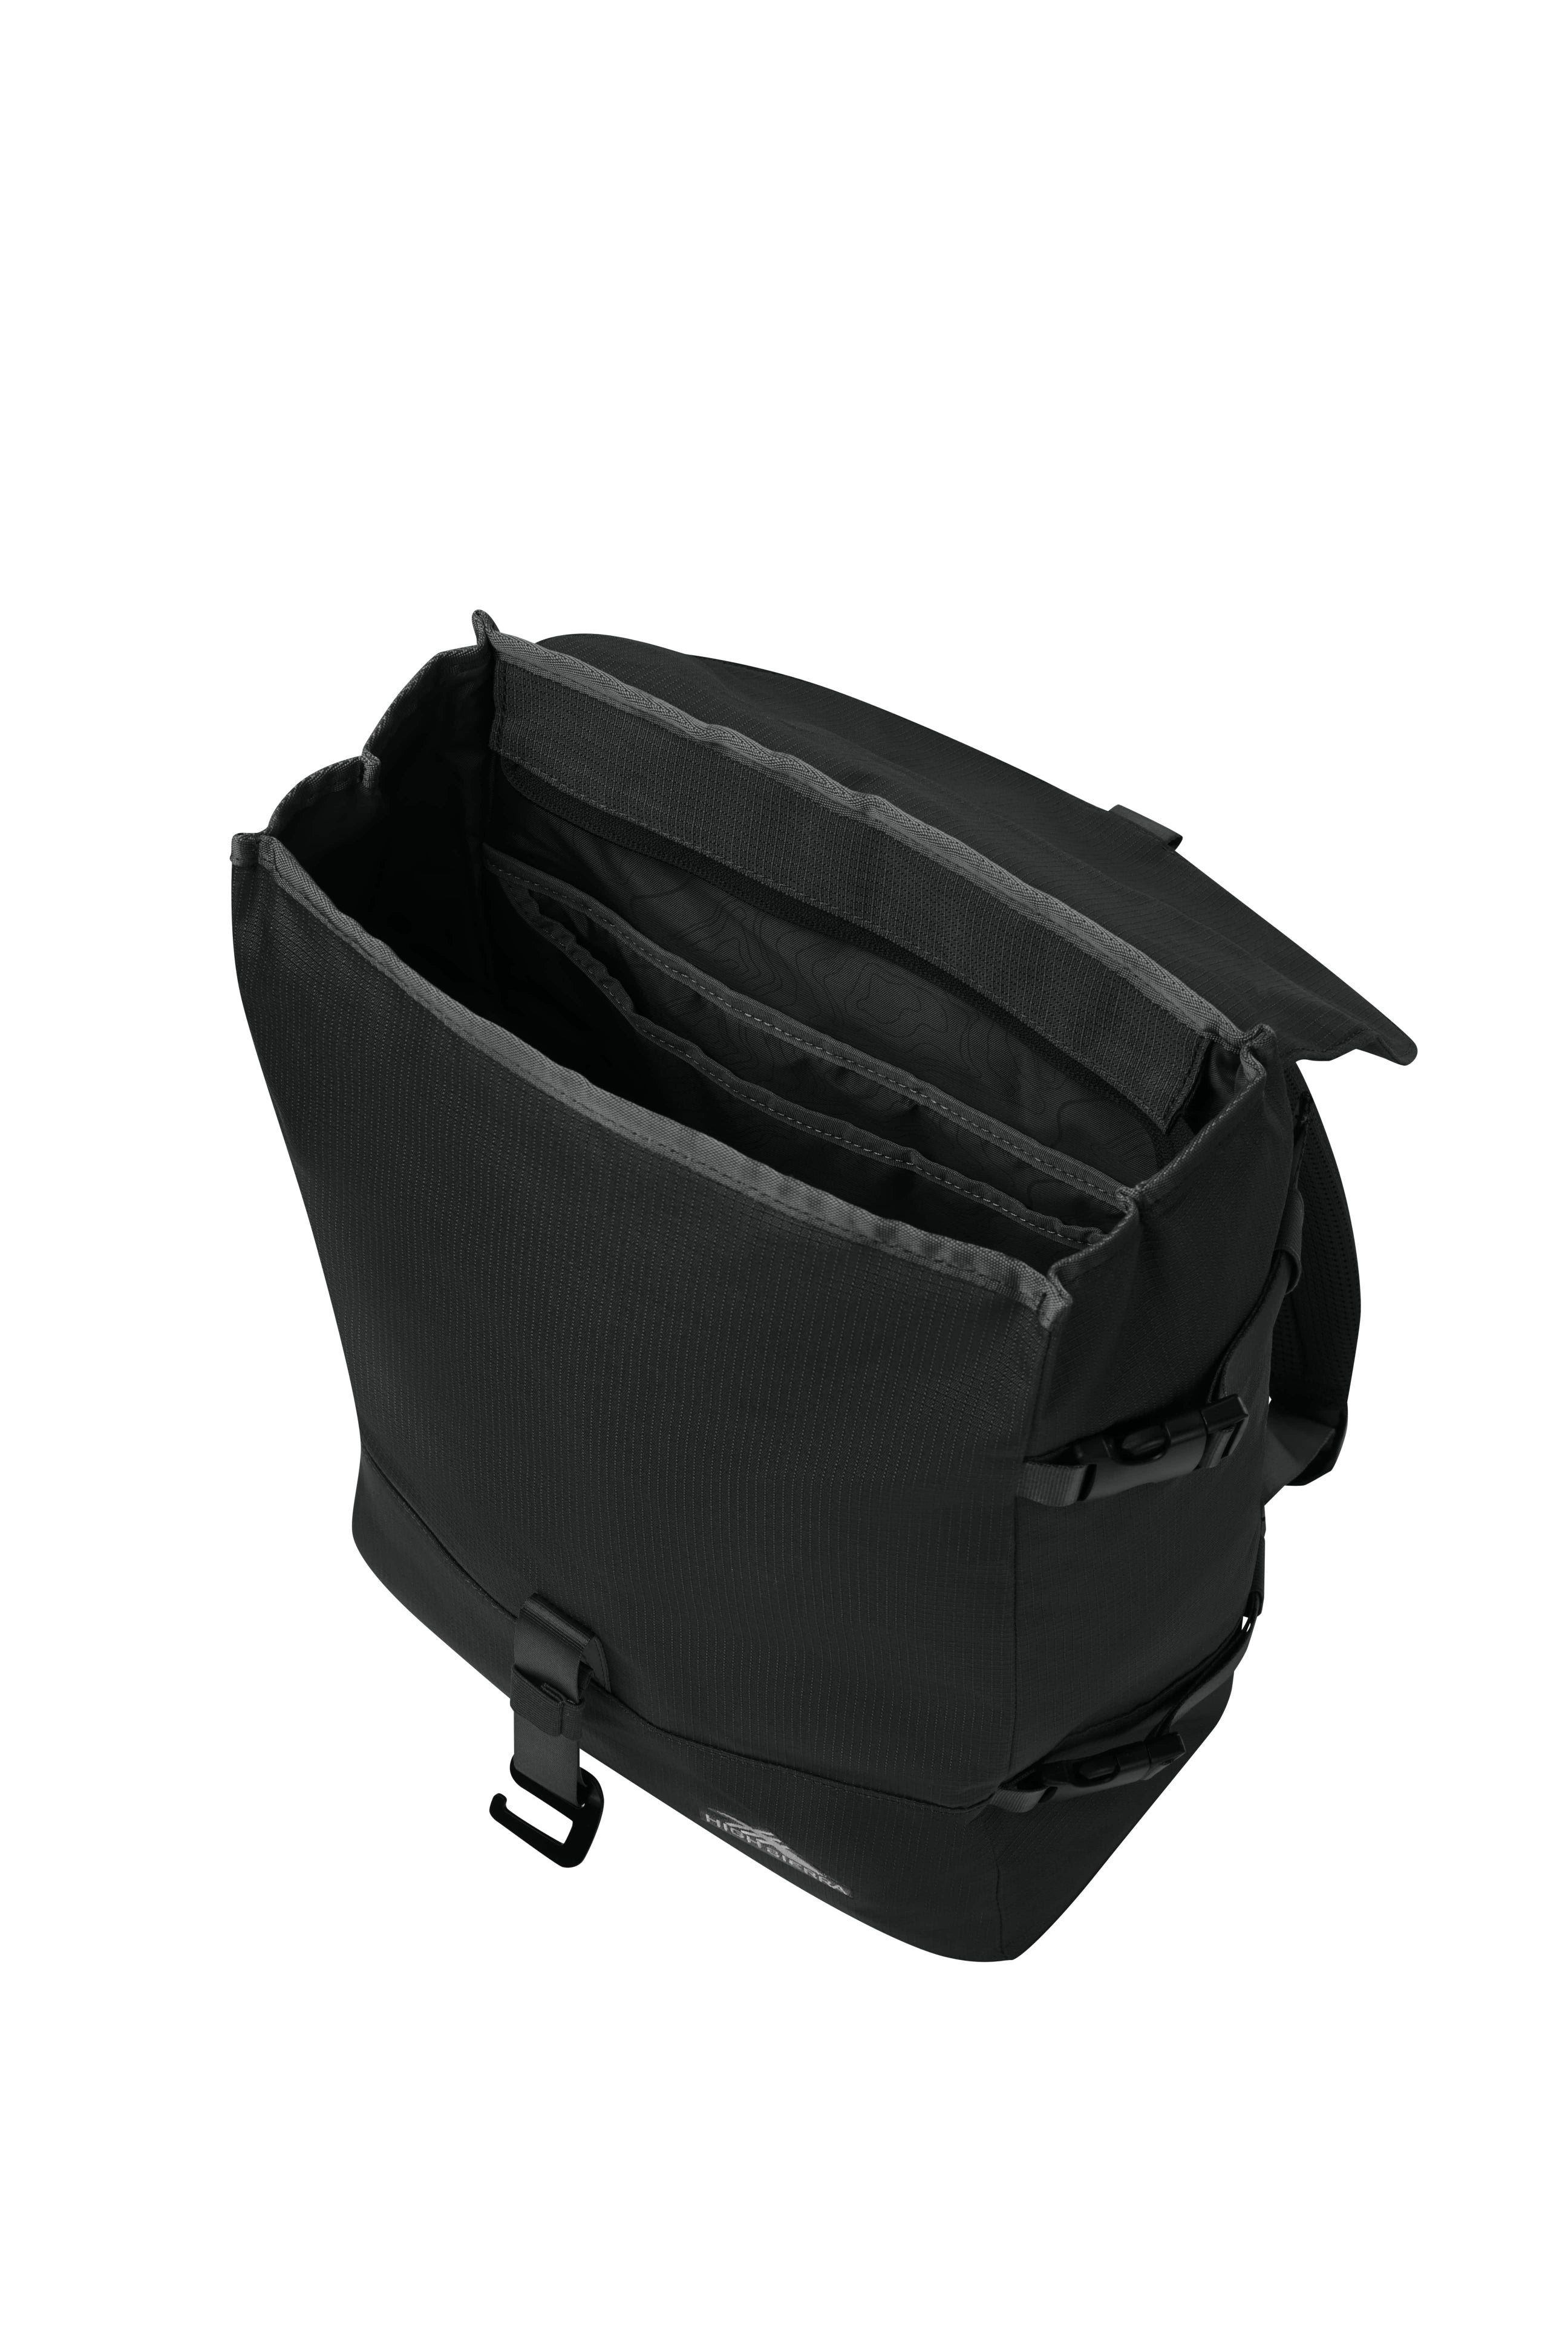 High Sierra - Camille 20L 15.6in Laptop backpack - Black-8